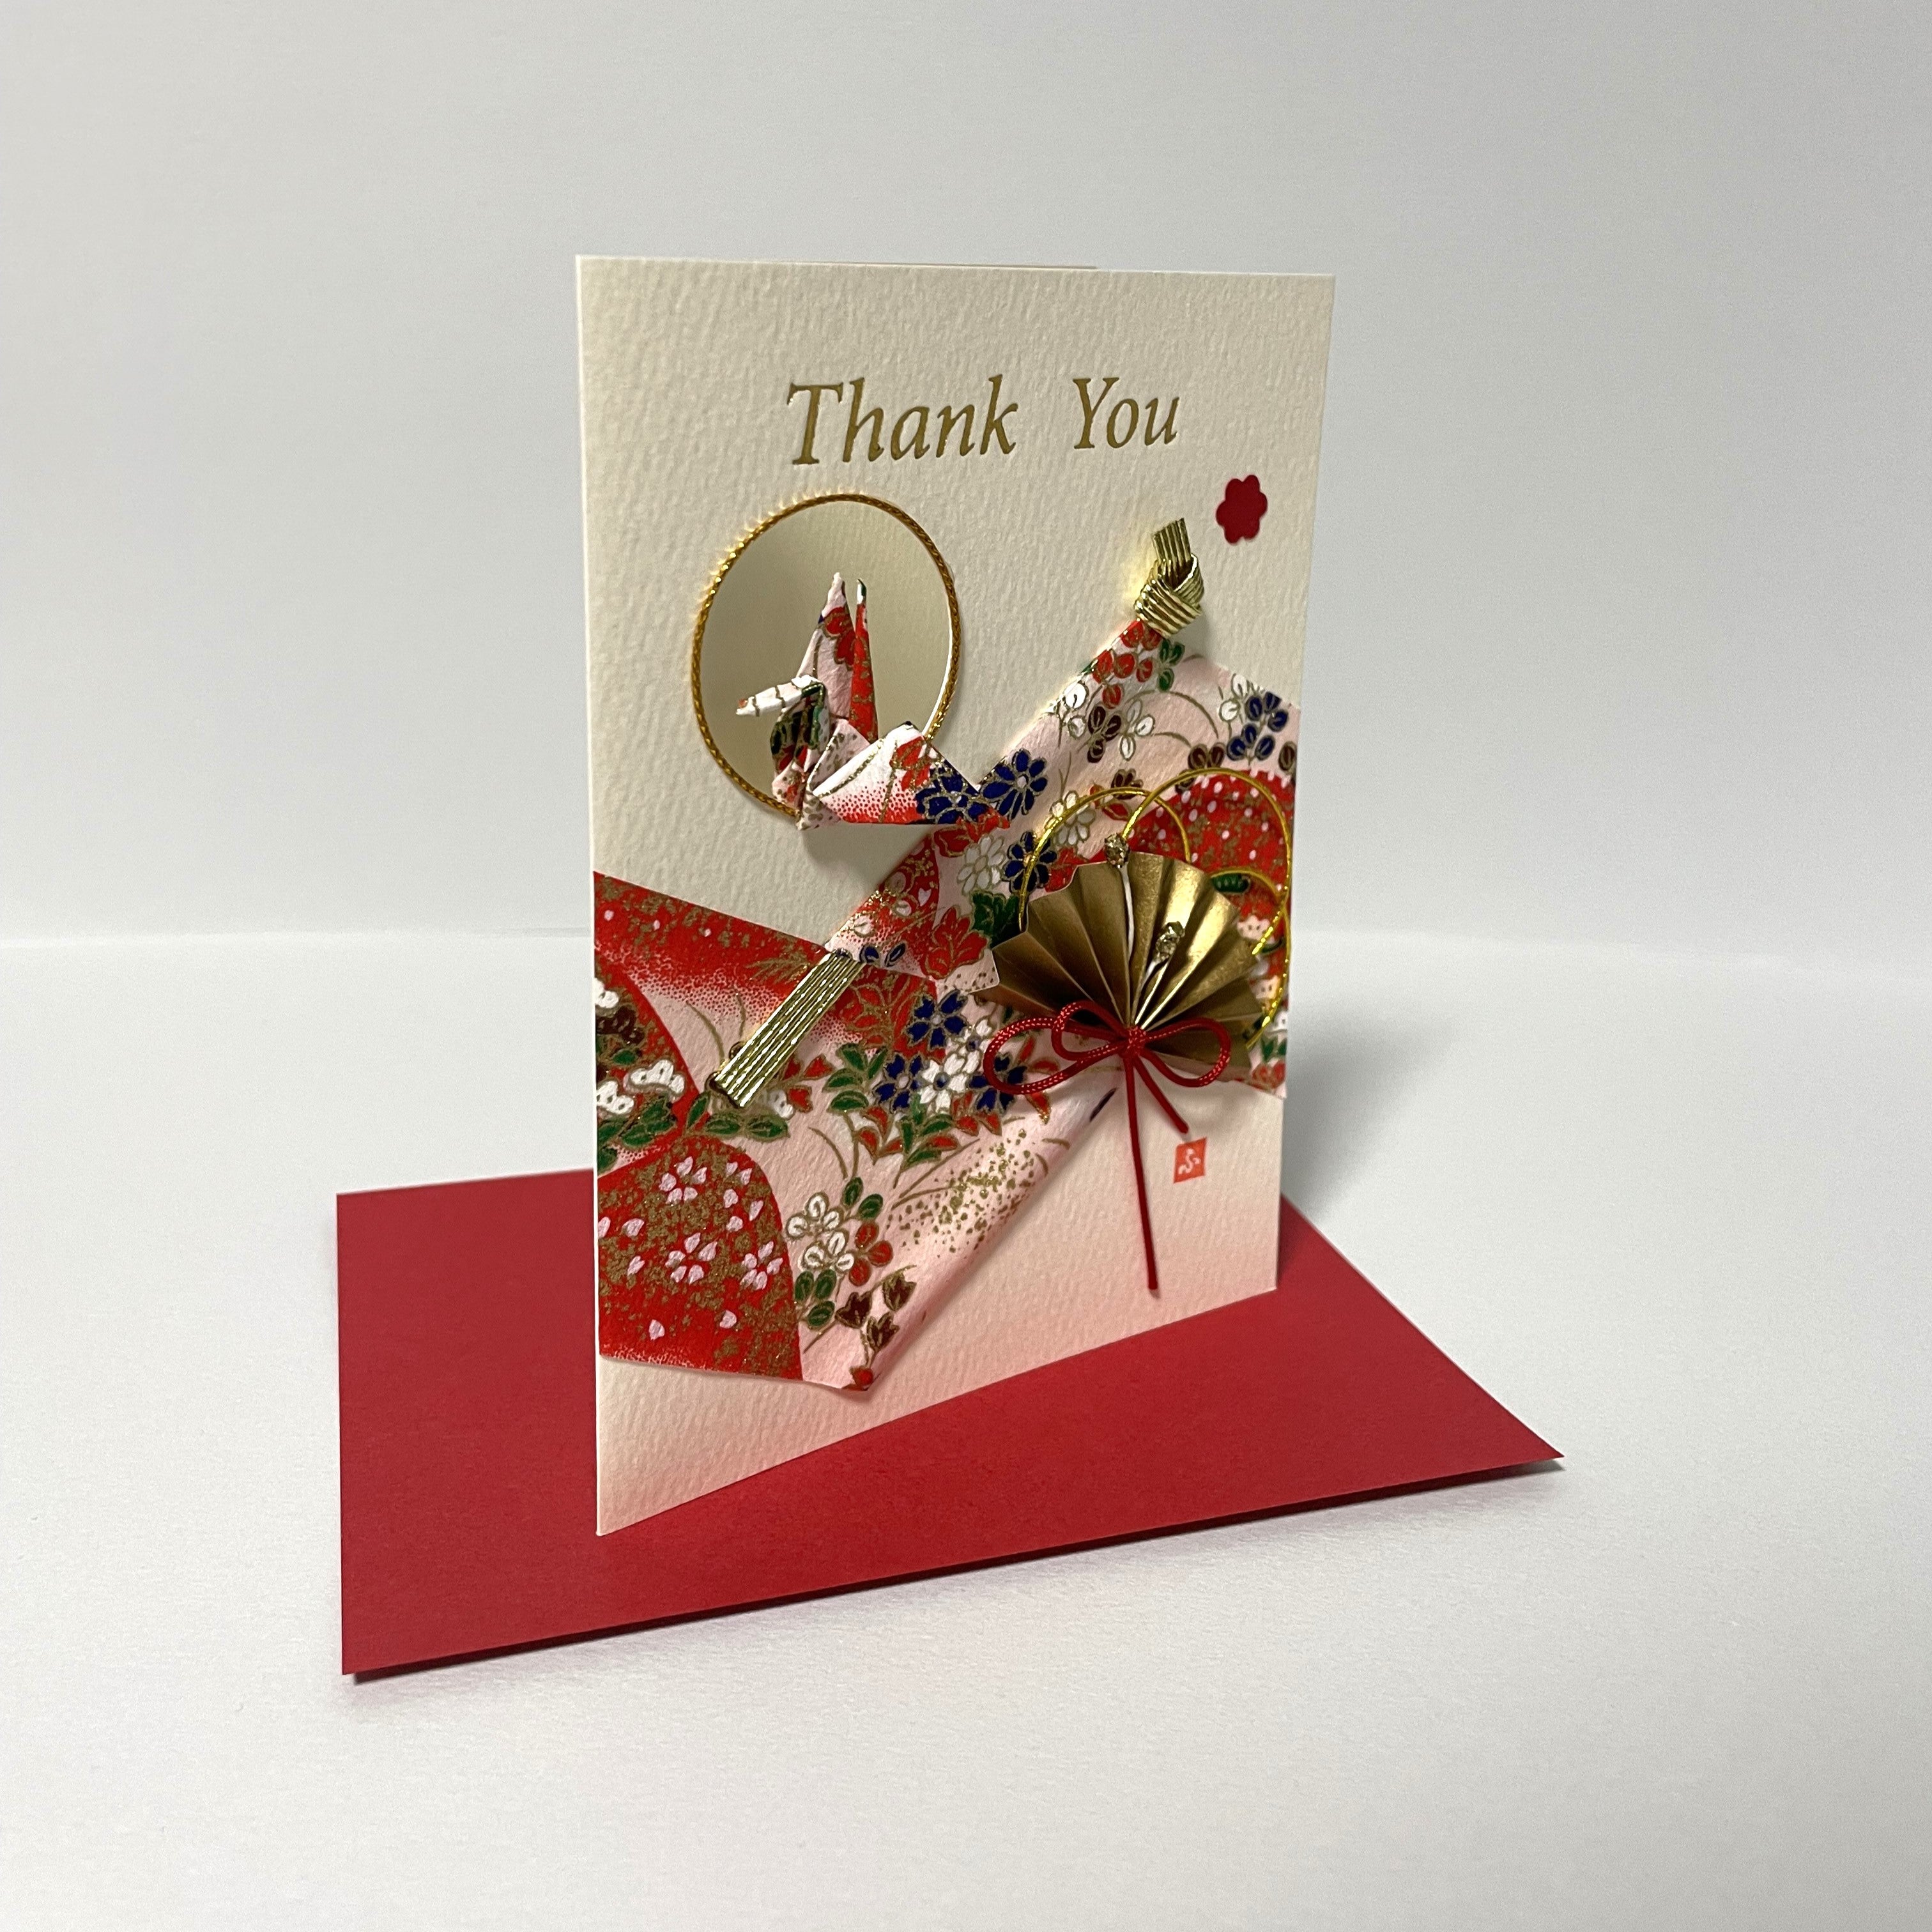 Handmade Greeting Card "Red Crane (Thank You)"